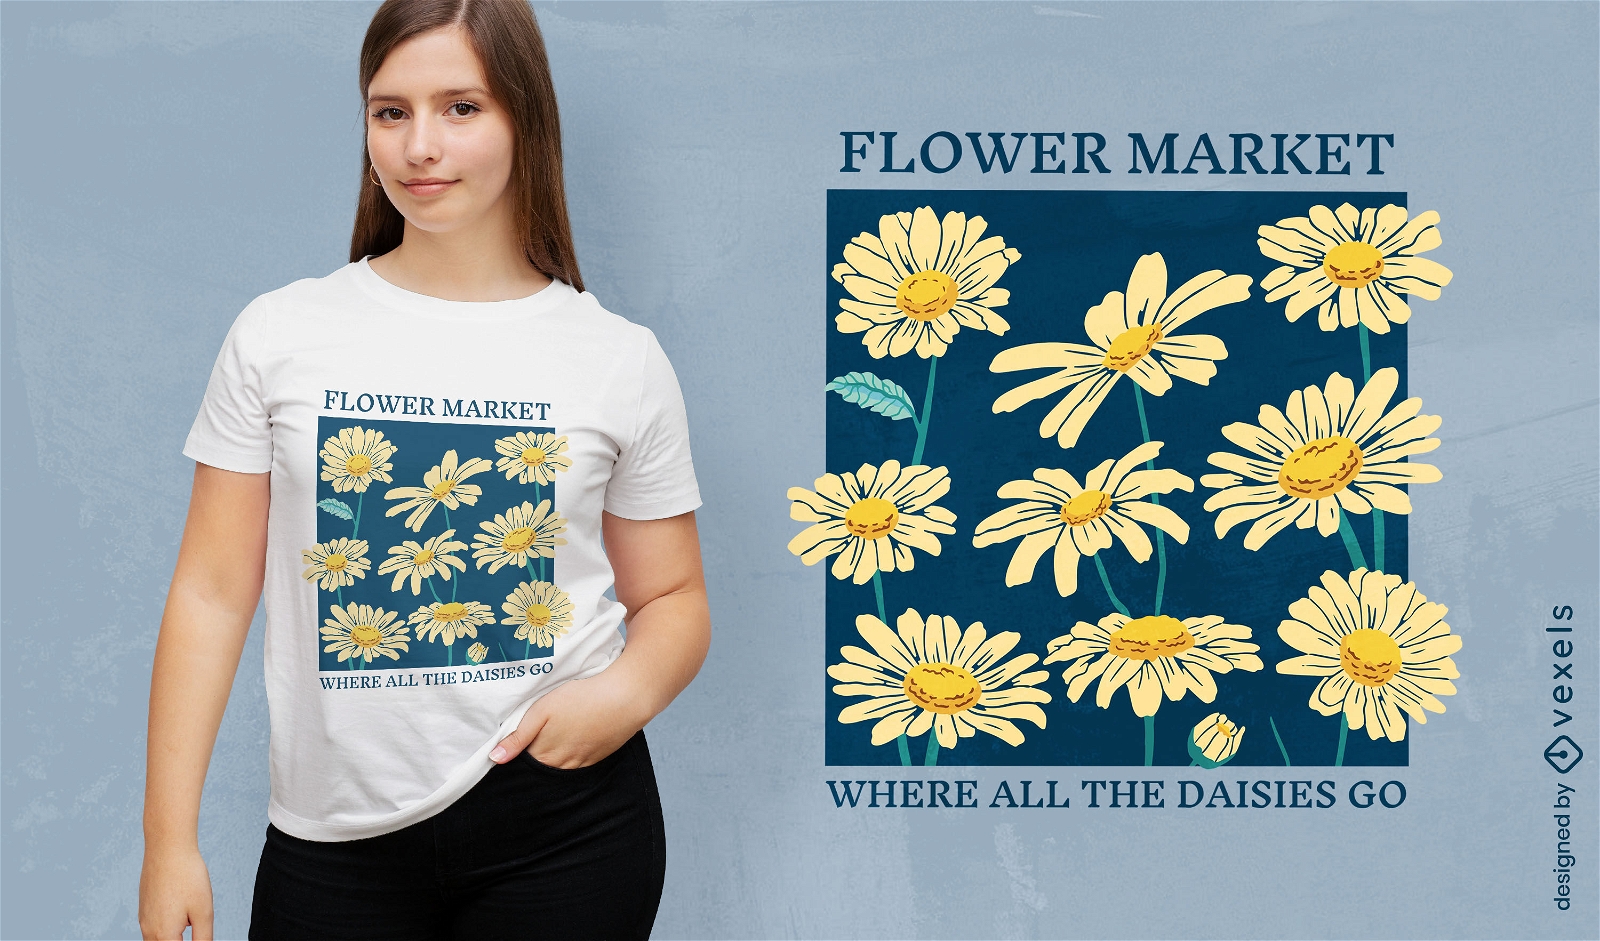 Dise?o de camiseta de margaritas del mercado de flores.